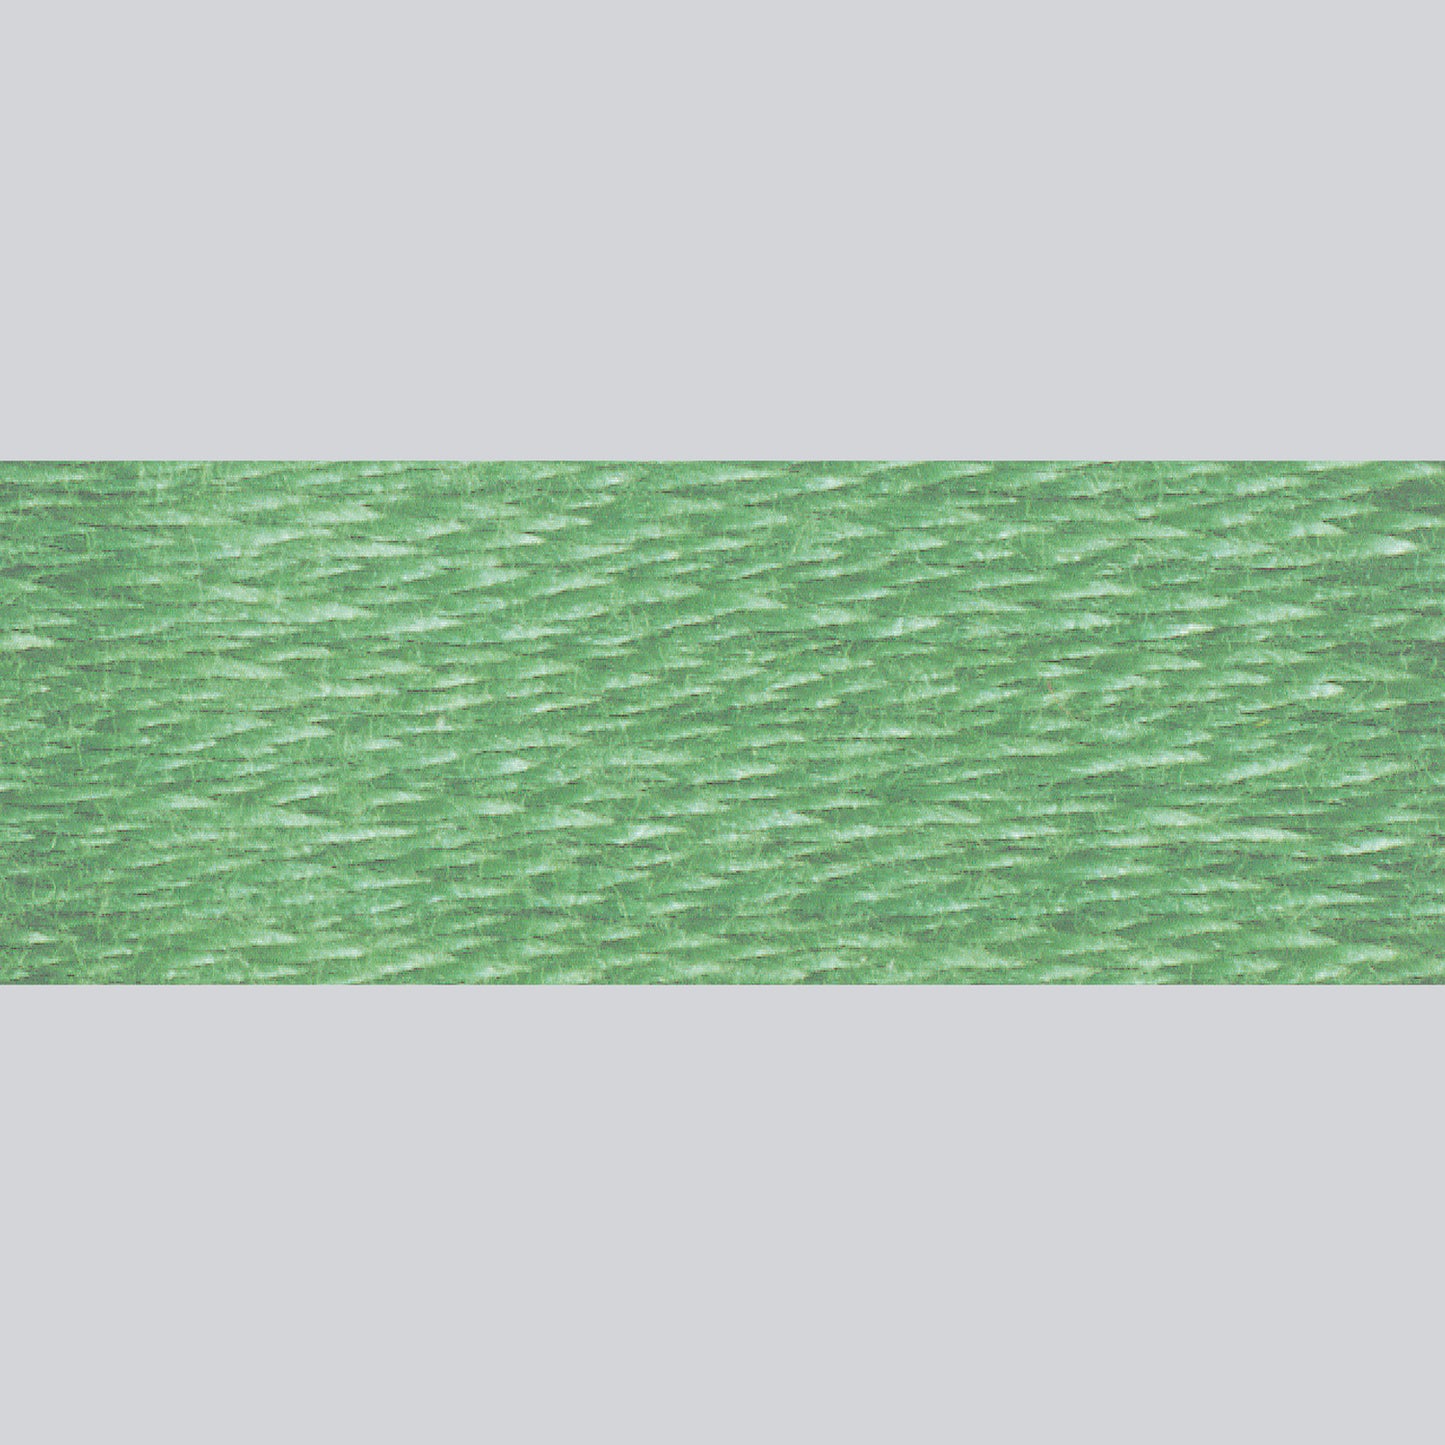 DMC Embroidery Floss - 320 Medium Pistachio Green Alternative View #1